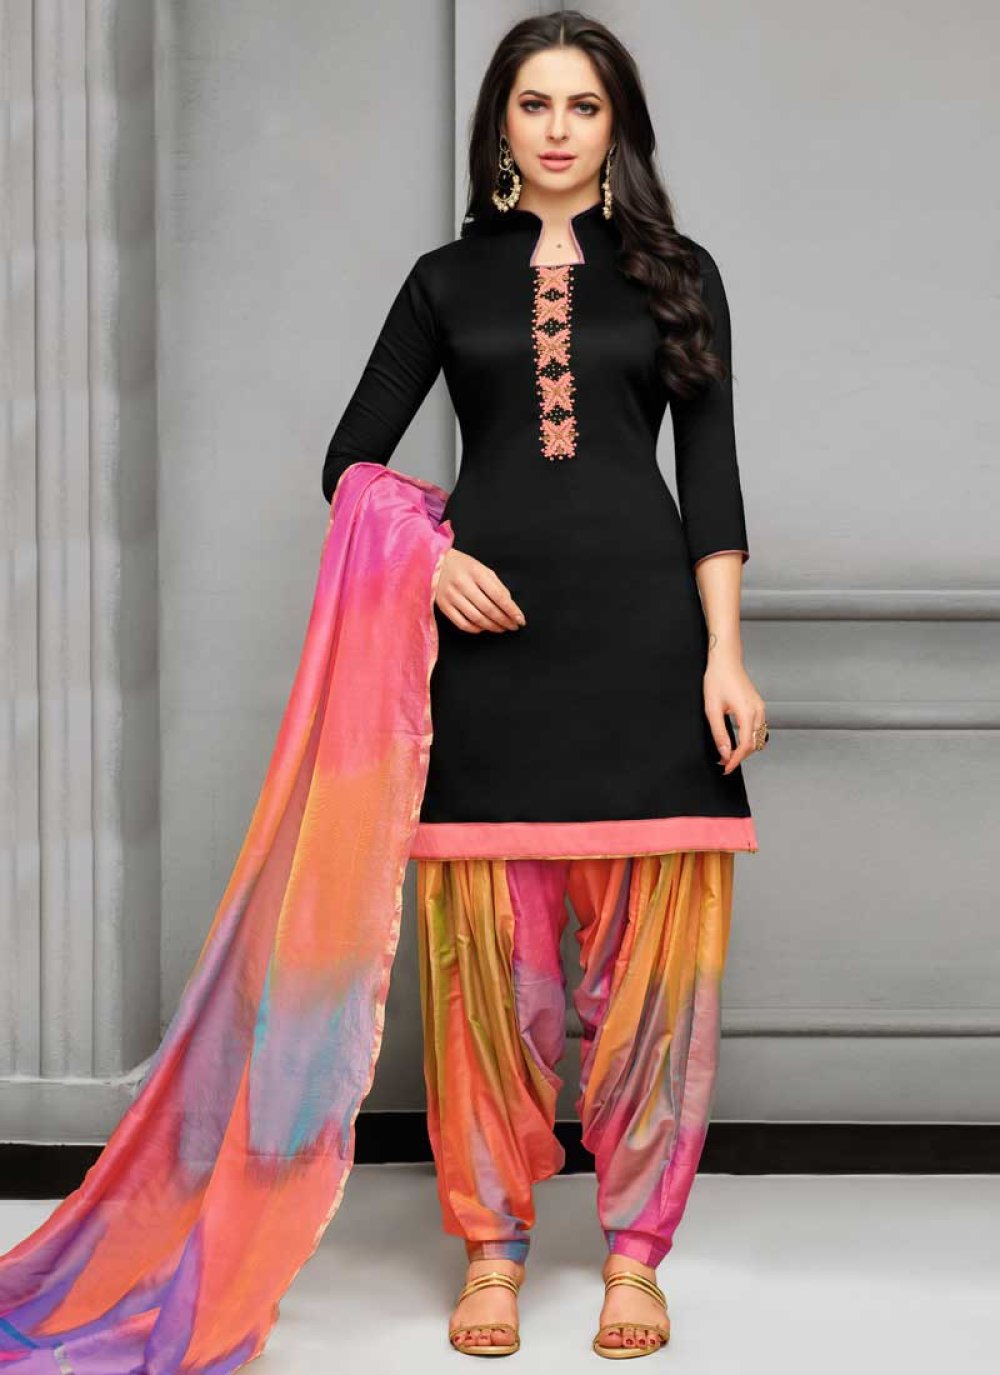 Buy PANASH TRENDS Women's Satin Cotton Embroidery Patiyala Salwar Suit  (Pink) at Amazon.in